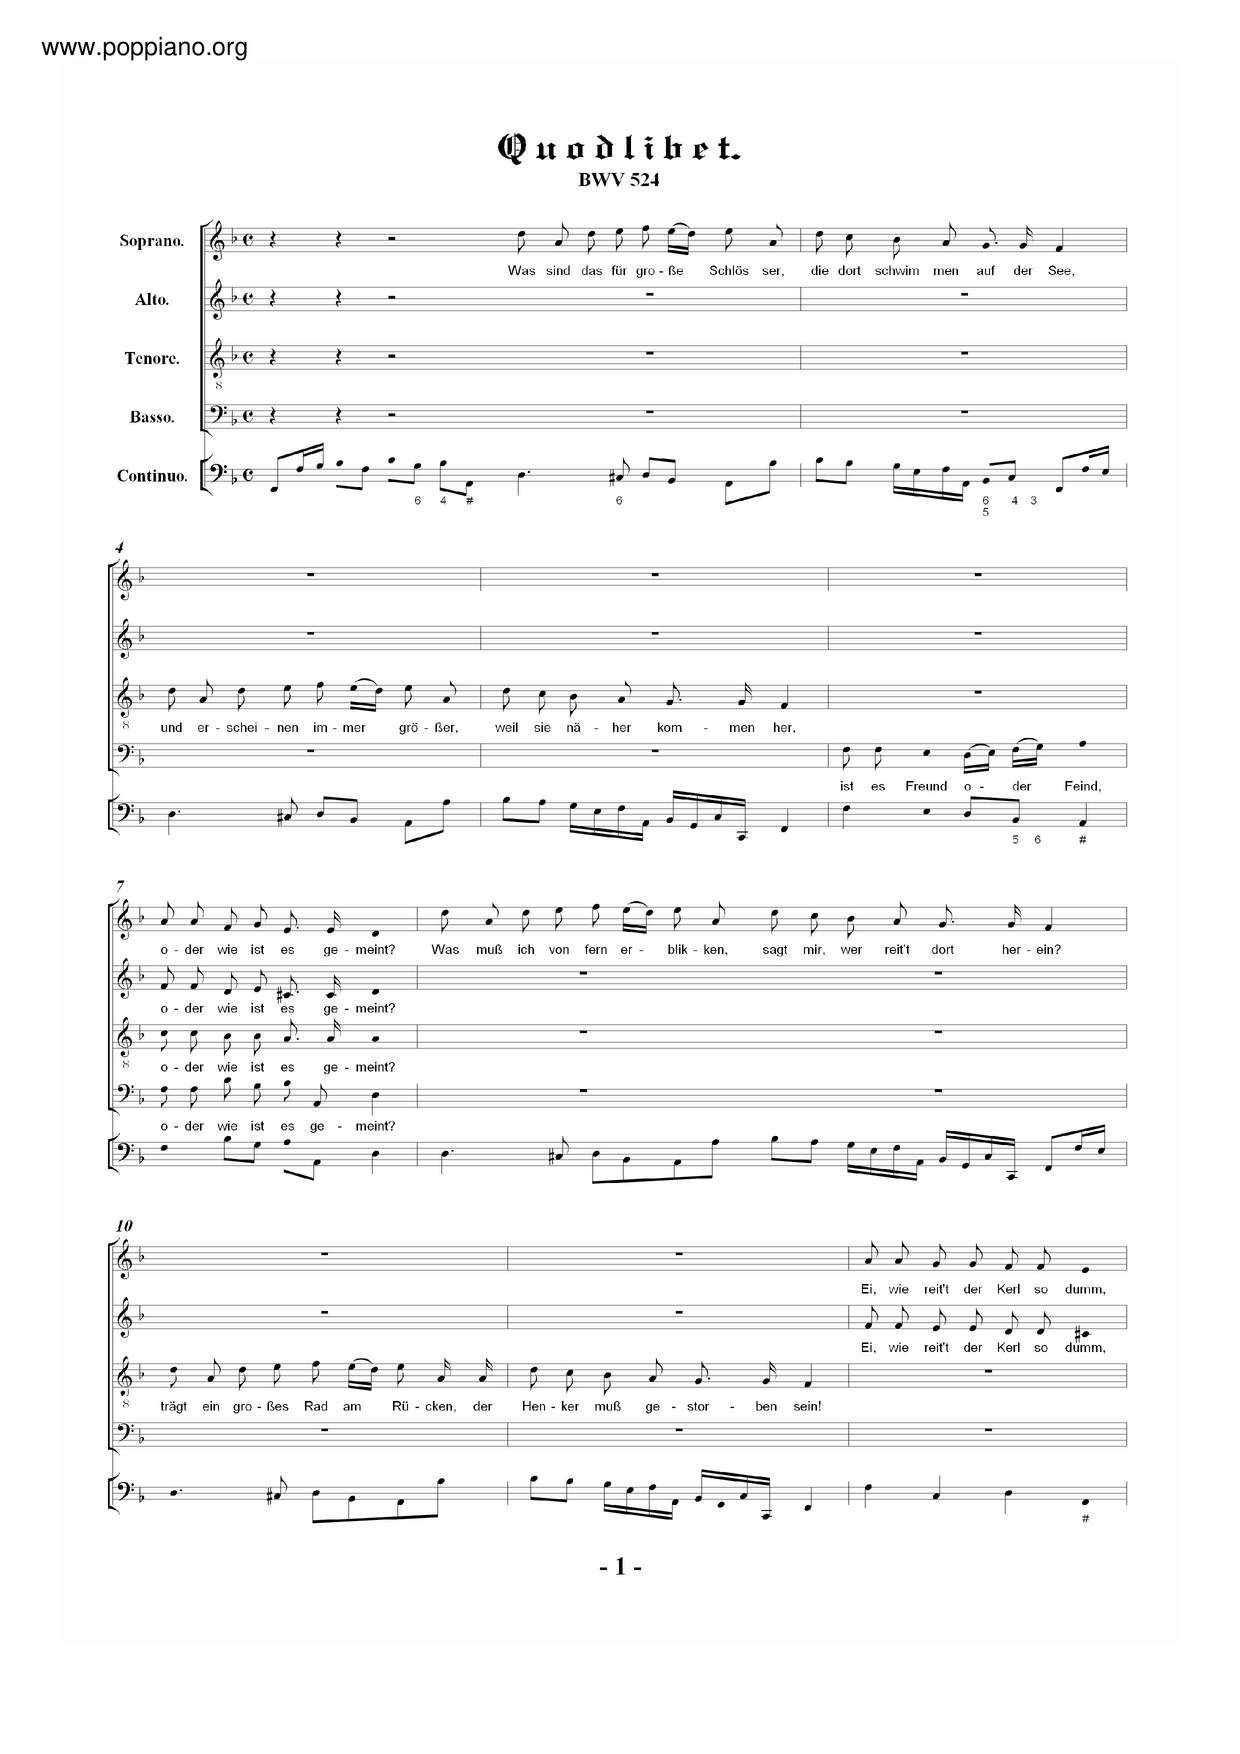 Quodlibet, BWV 524ピアノ譜